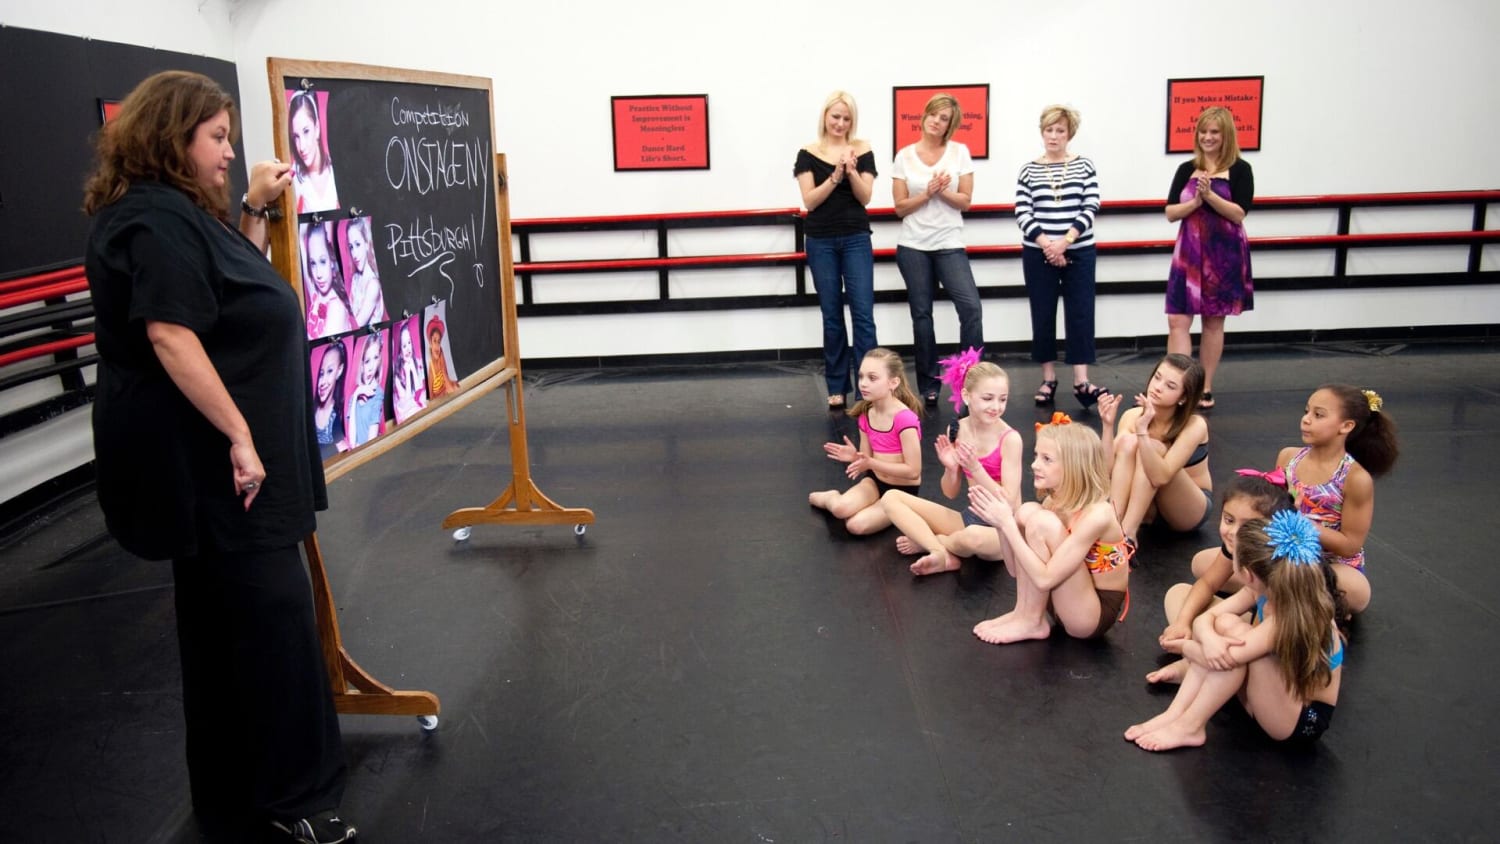 Abby Lee Miller reveals decision to sell Pennsylvania 'Dance Moms' studio